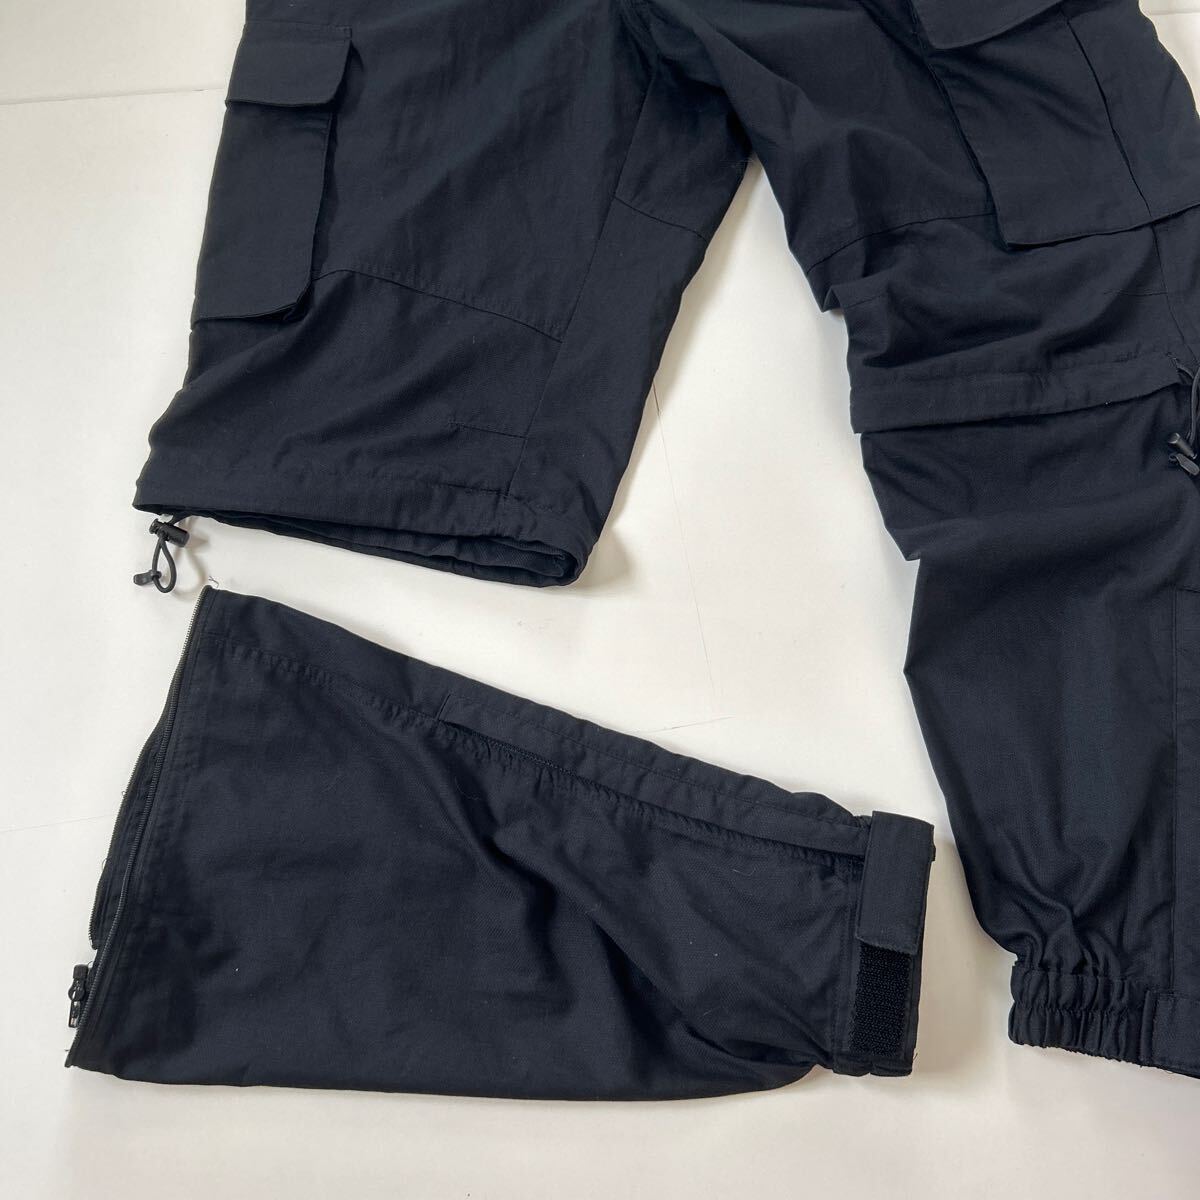  Gamakatsu summer dry брюки M размер 